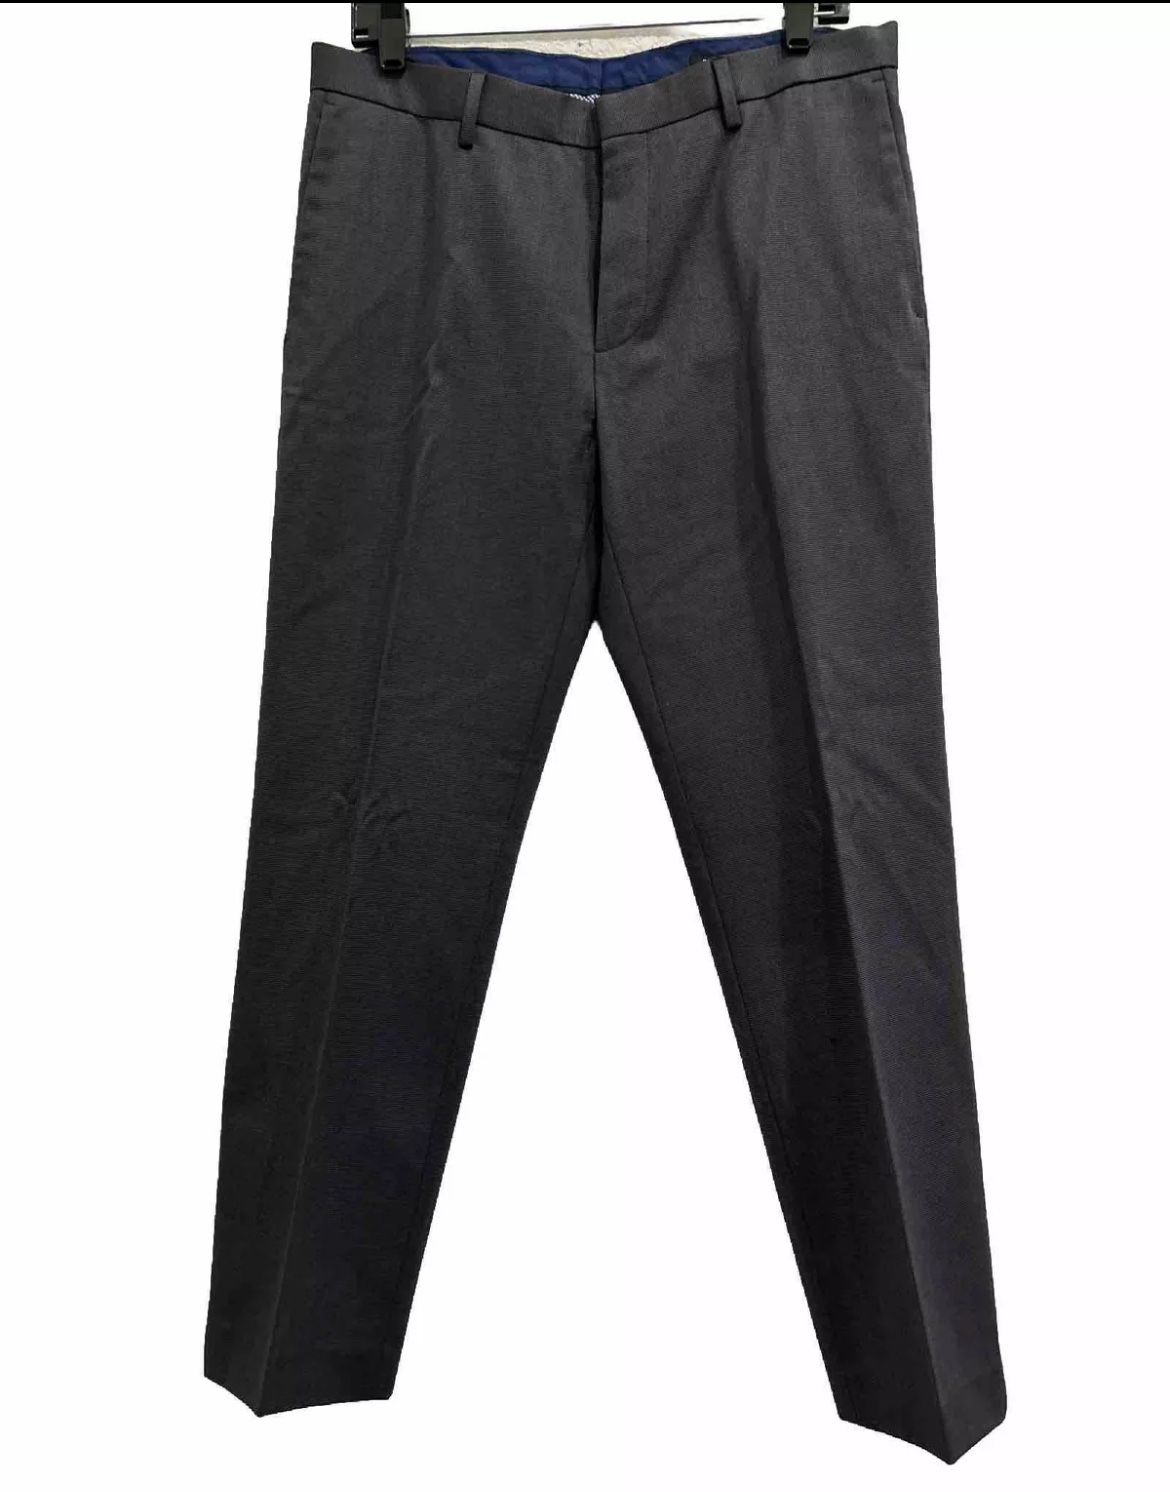 Banana Republic no-iron modern slim fit mens dress pants 32 x 32